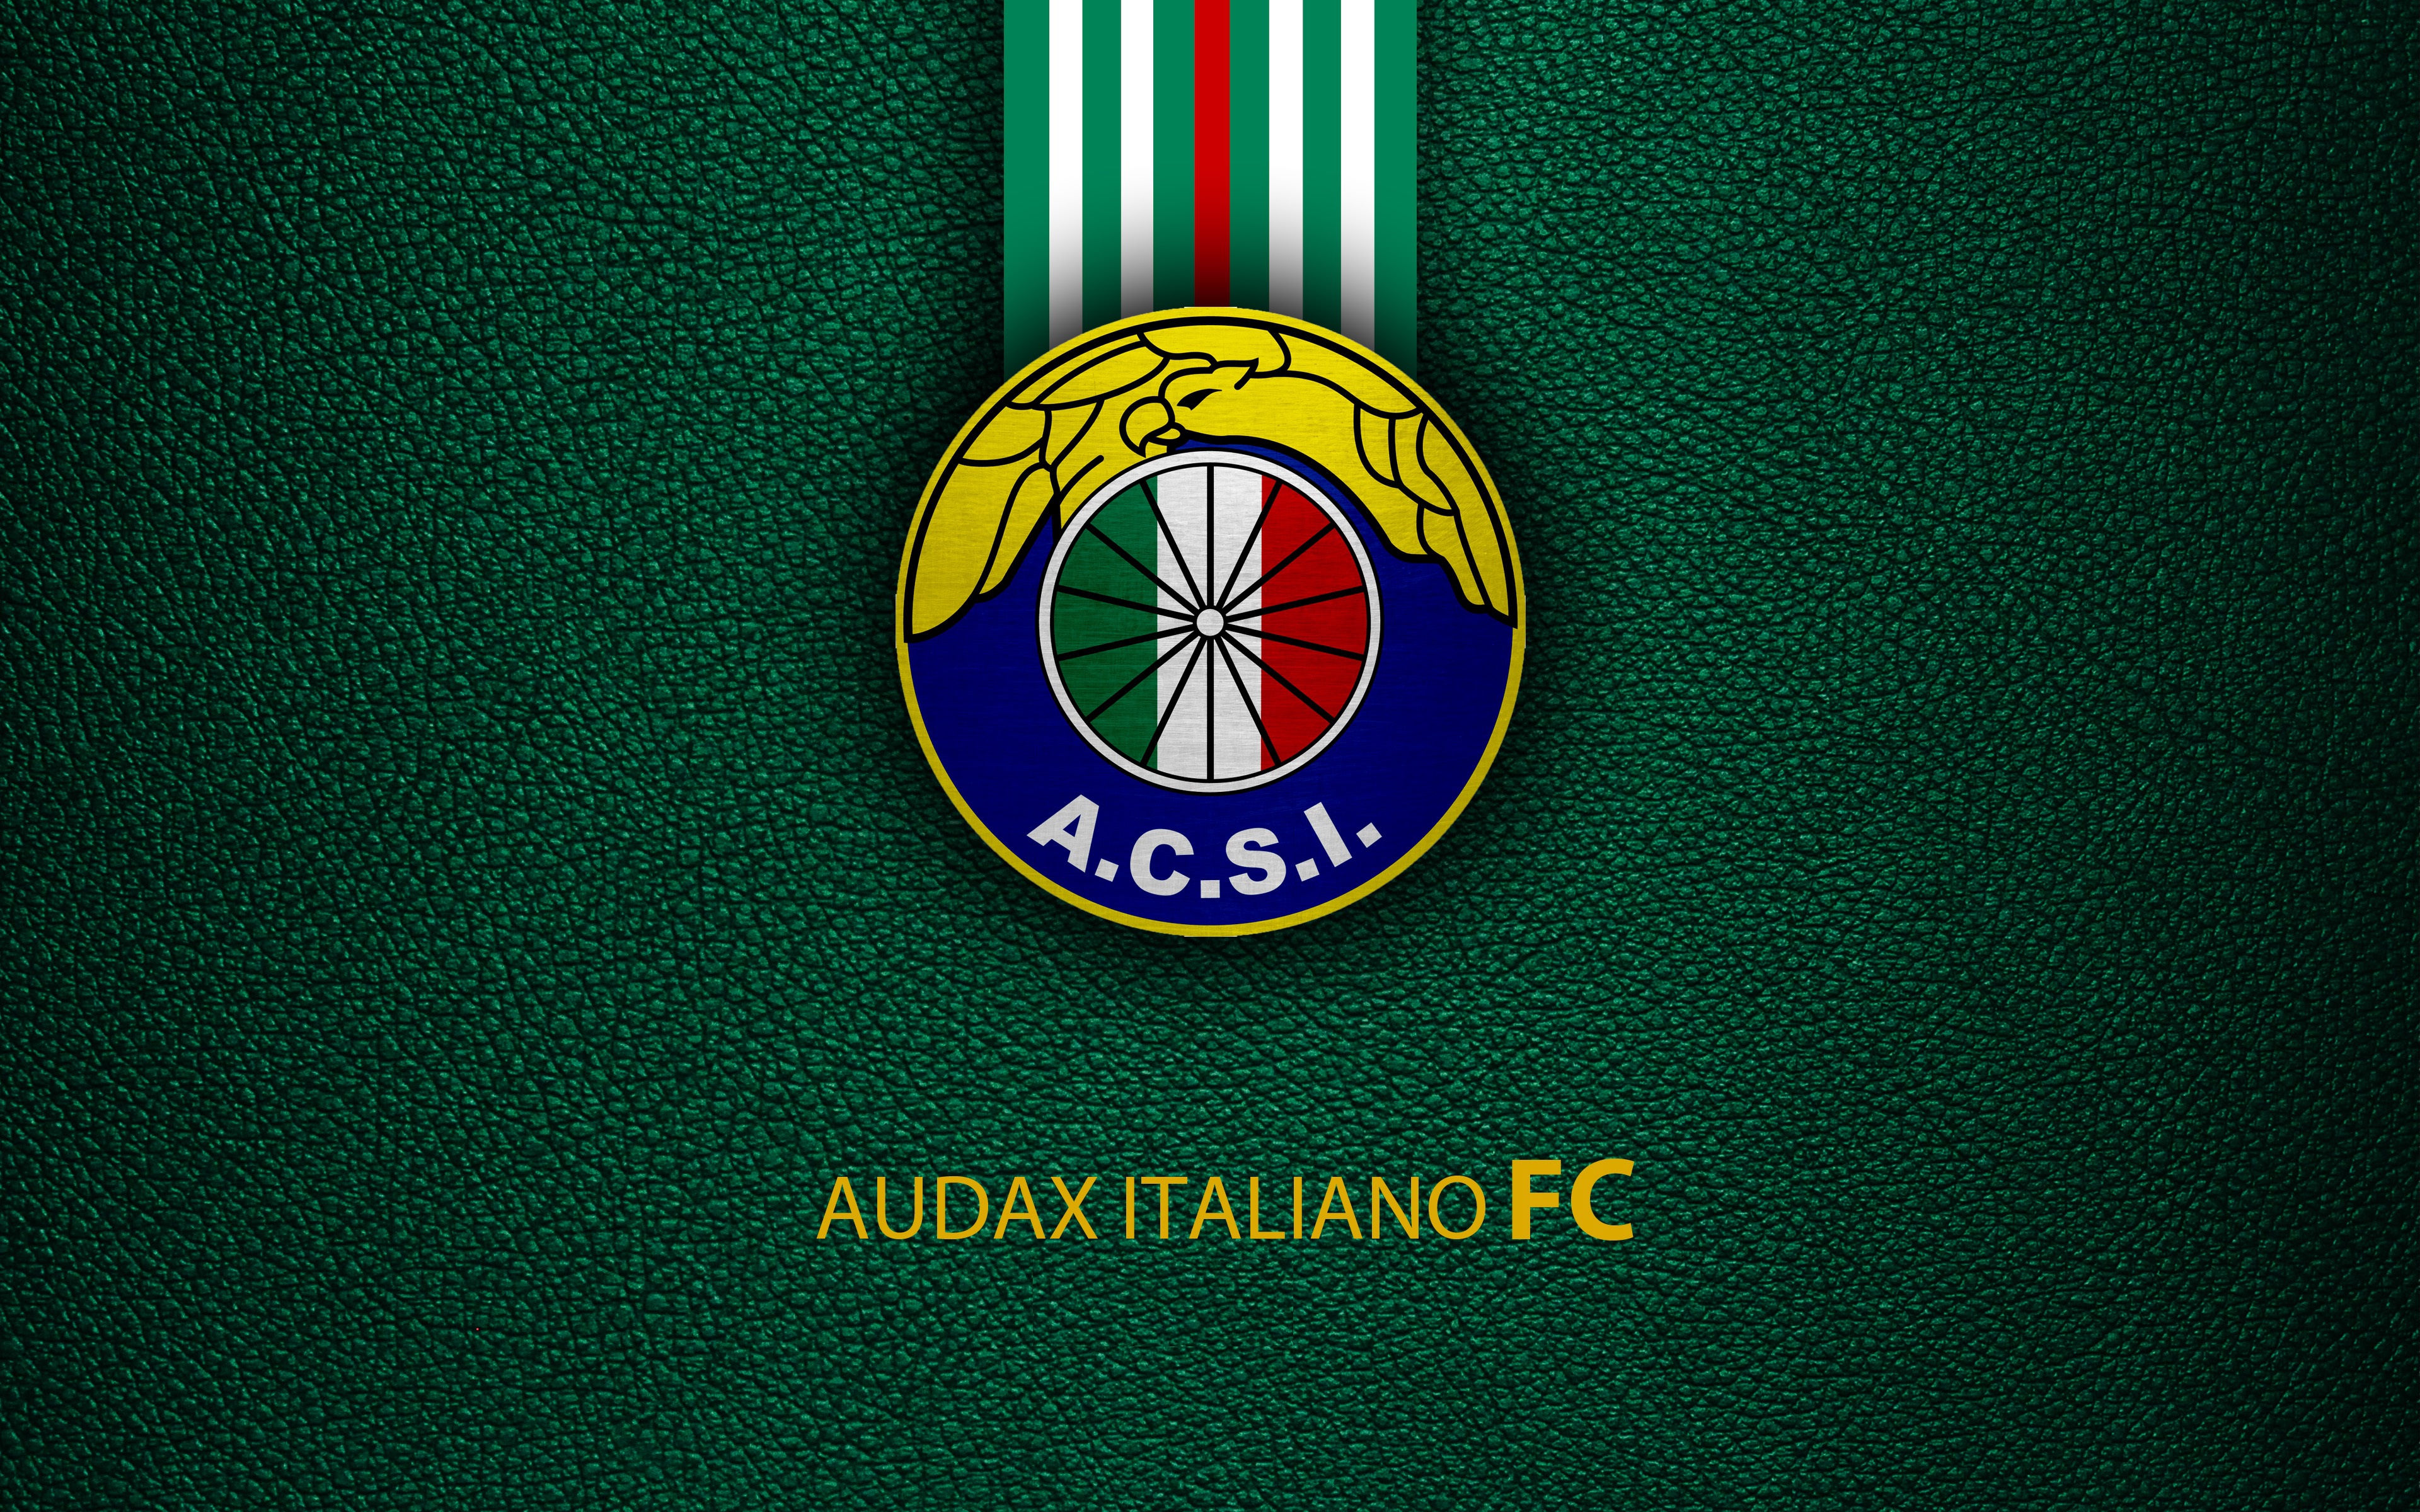 Аудакс итальяно кокимбо унидо. Аудакс итальяно. ФК Аудакс итальяно лого. Медали Audax Club. BB Italia logo.